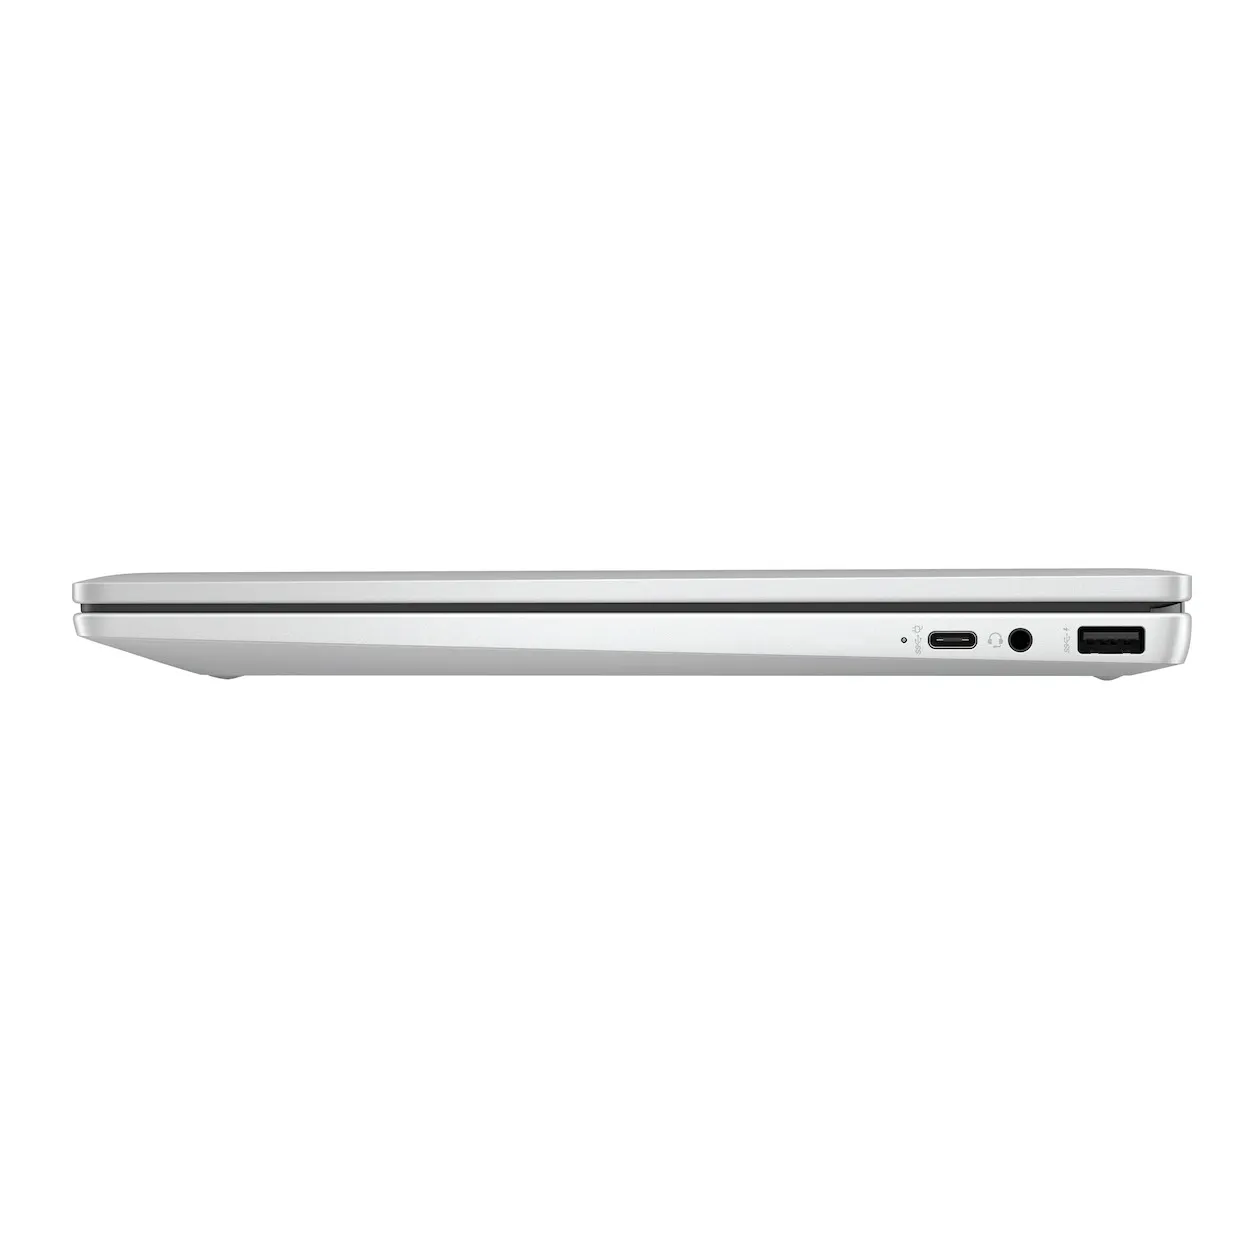 HP Chromebook x360 14b-cd0025nd